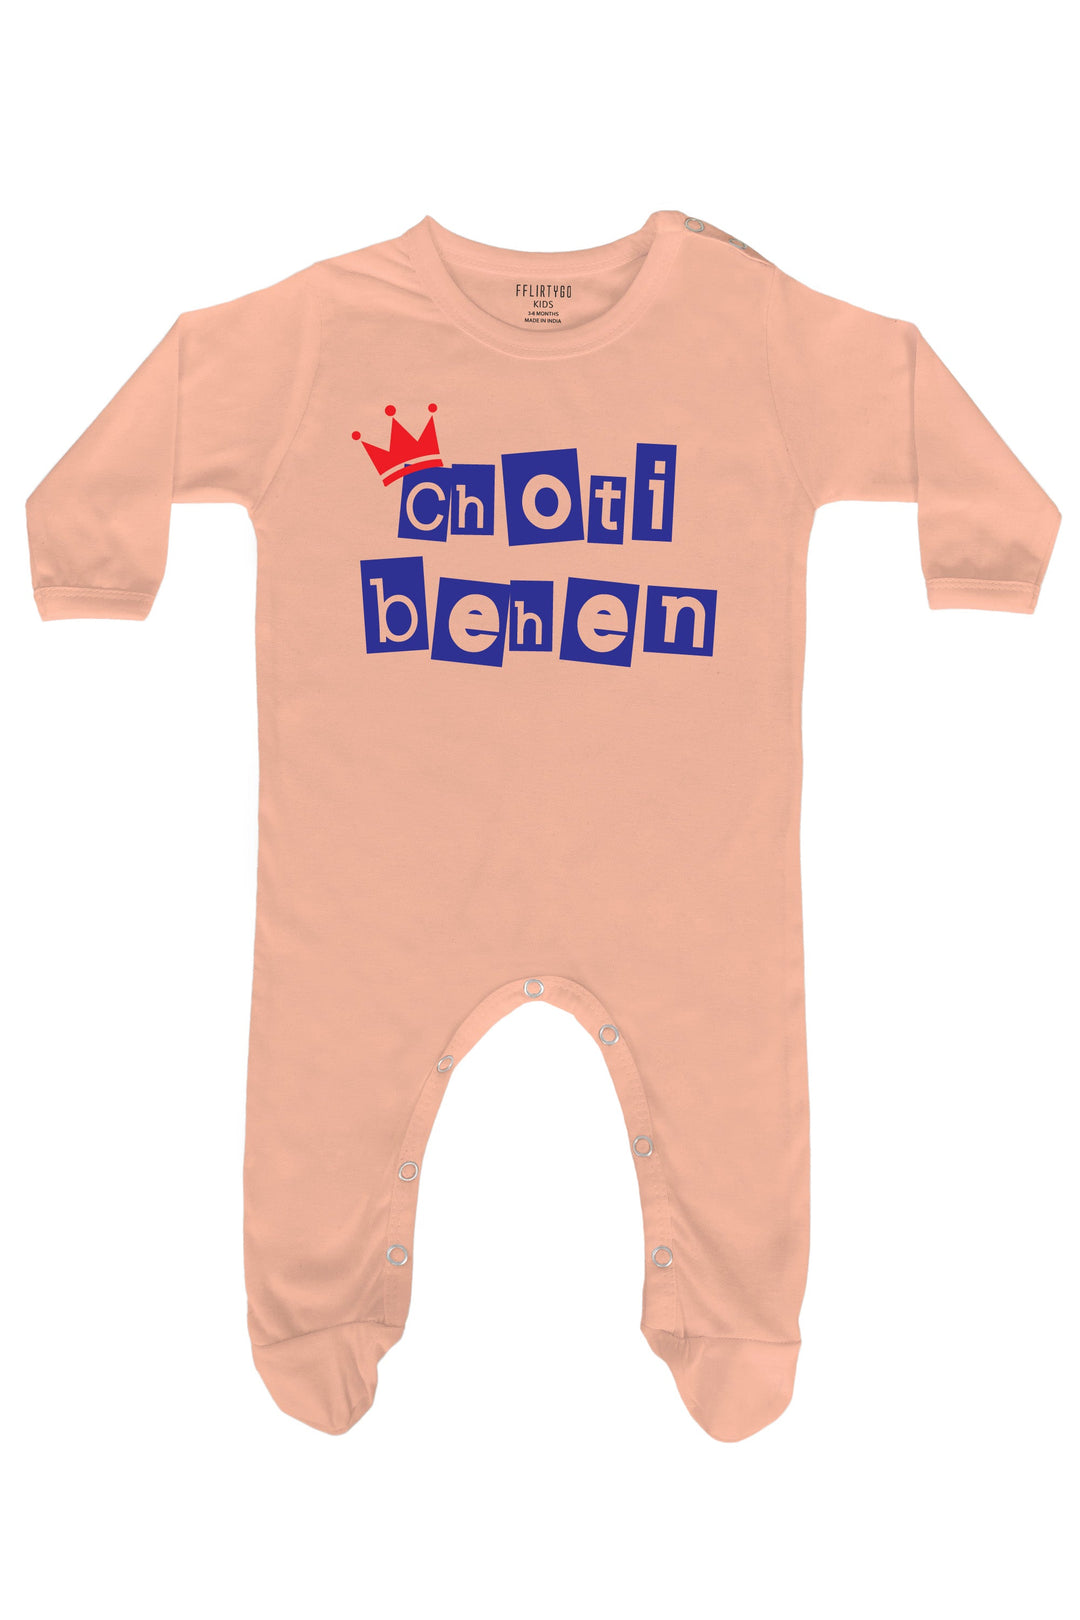 Choti Behen in Box Design Baby Romper | Onesies